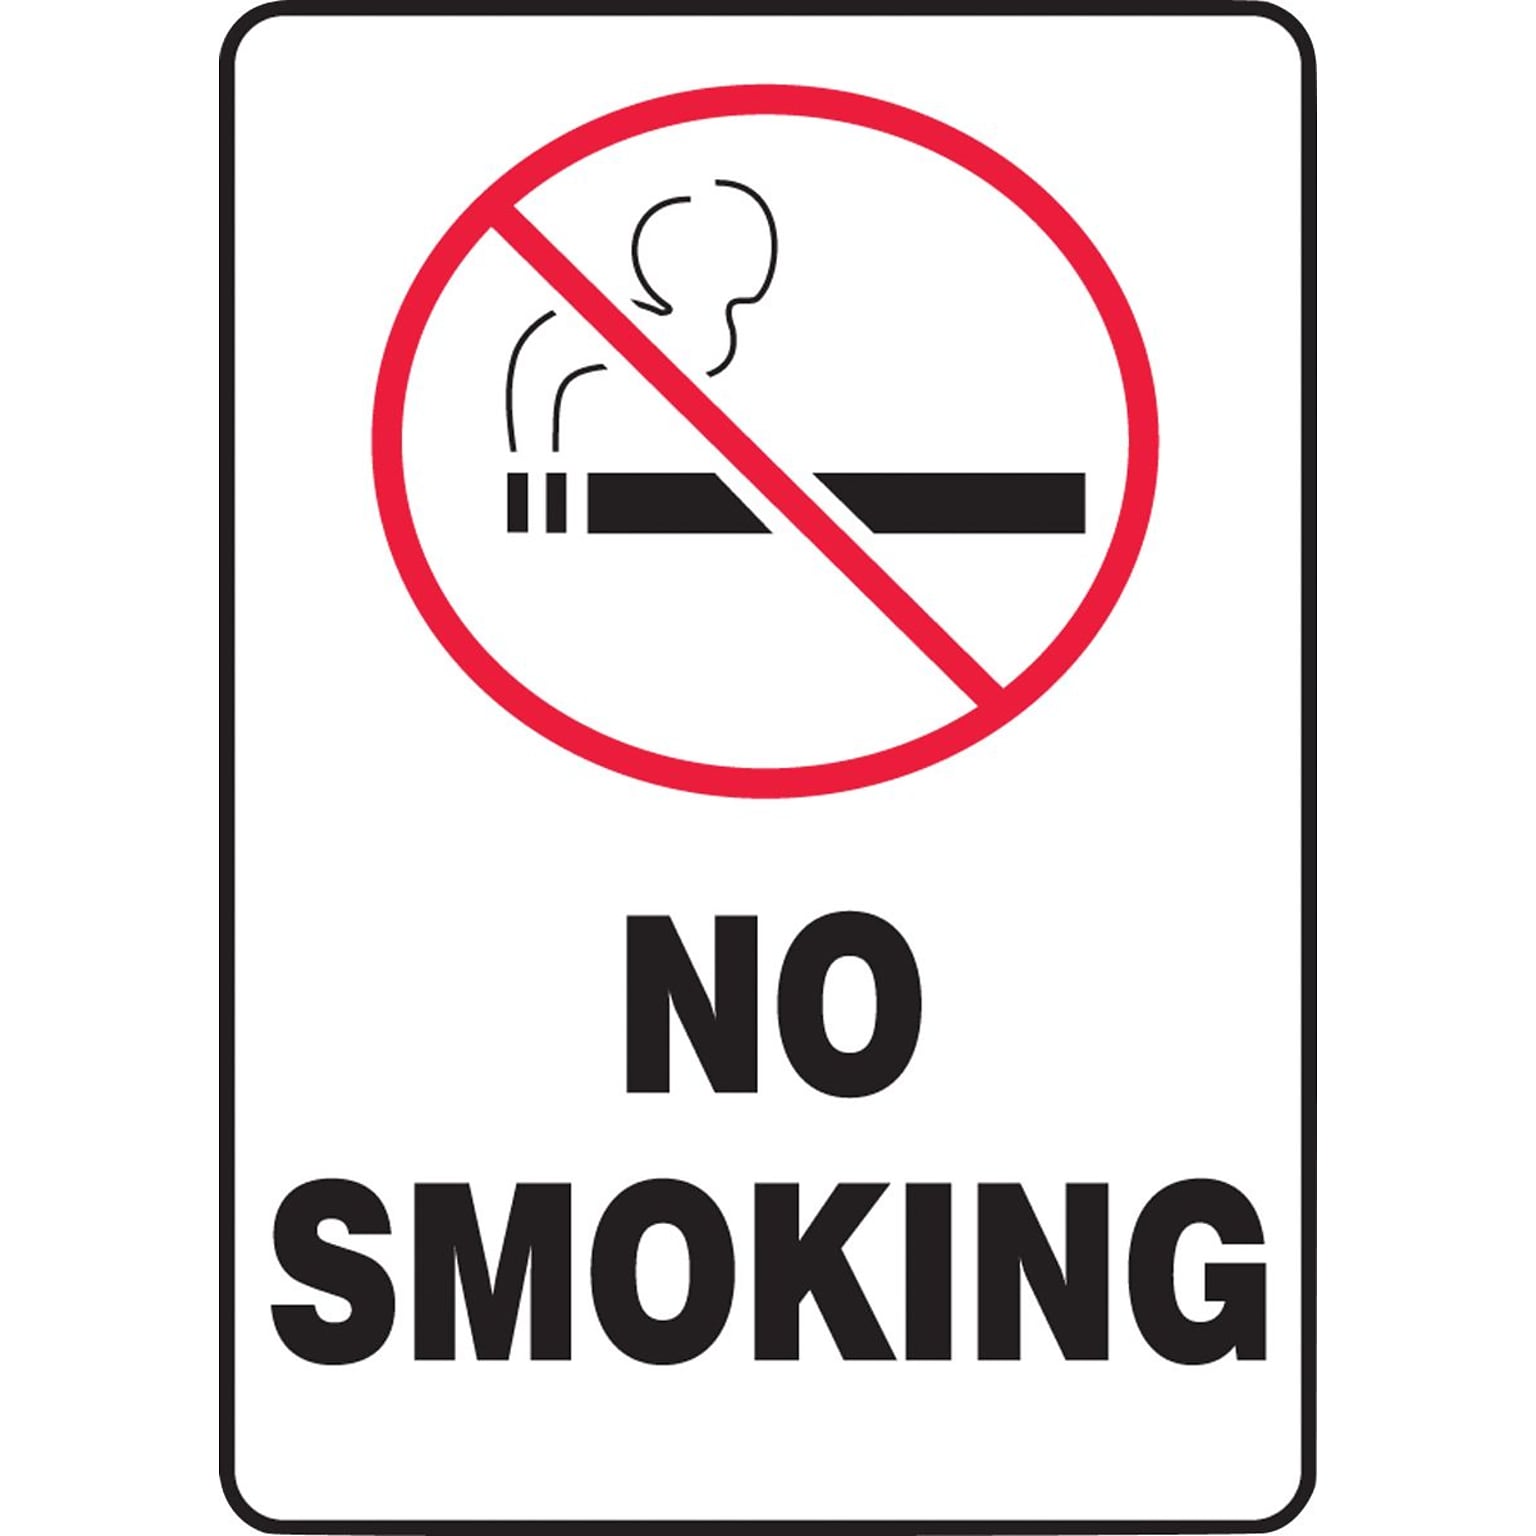 Accuform Safety Sign, NO SMOKING, 14 x 10, Aluminum (MSMK919VA)